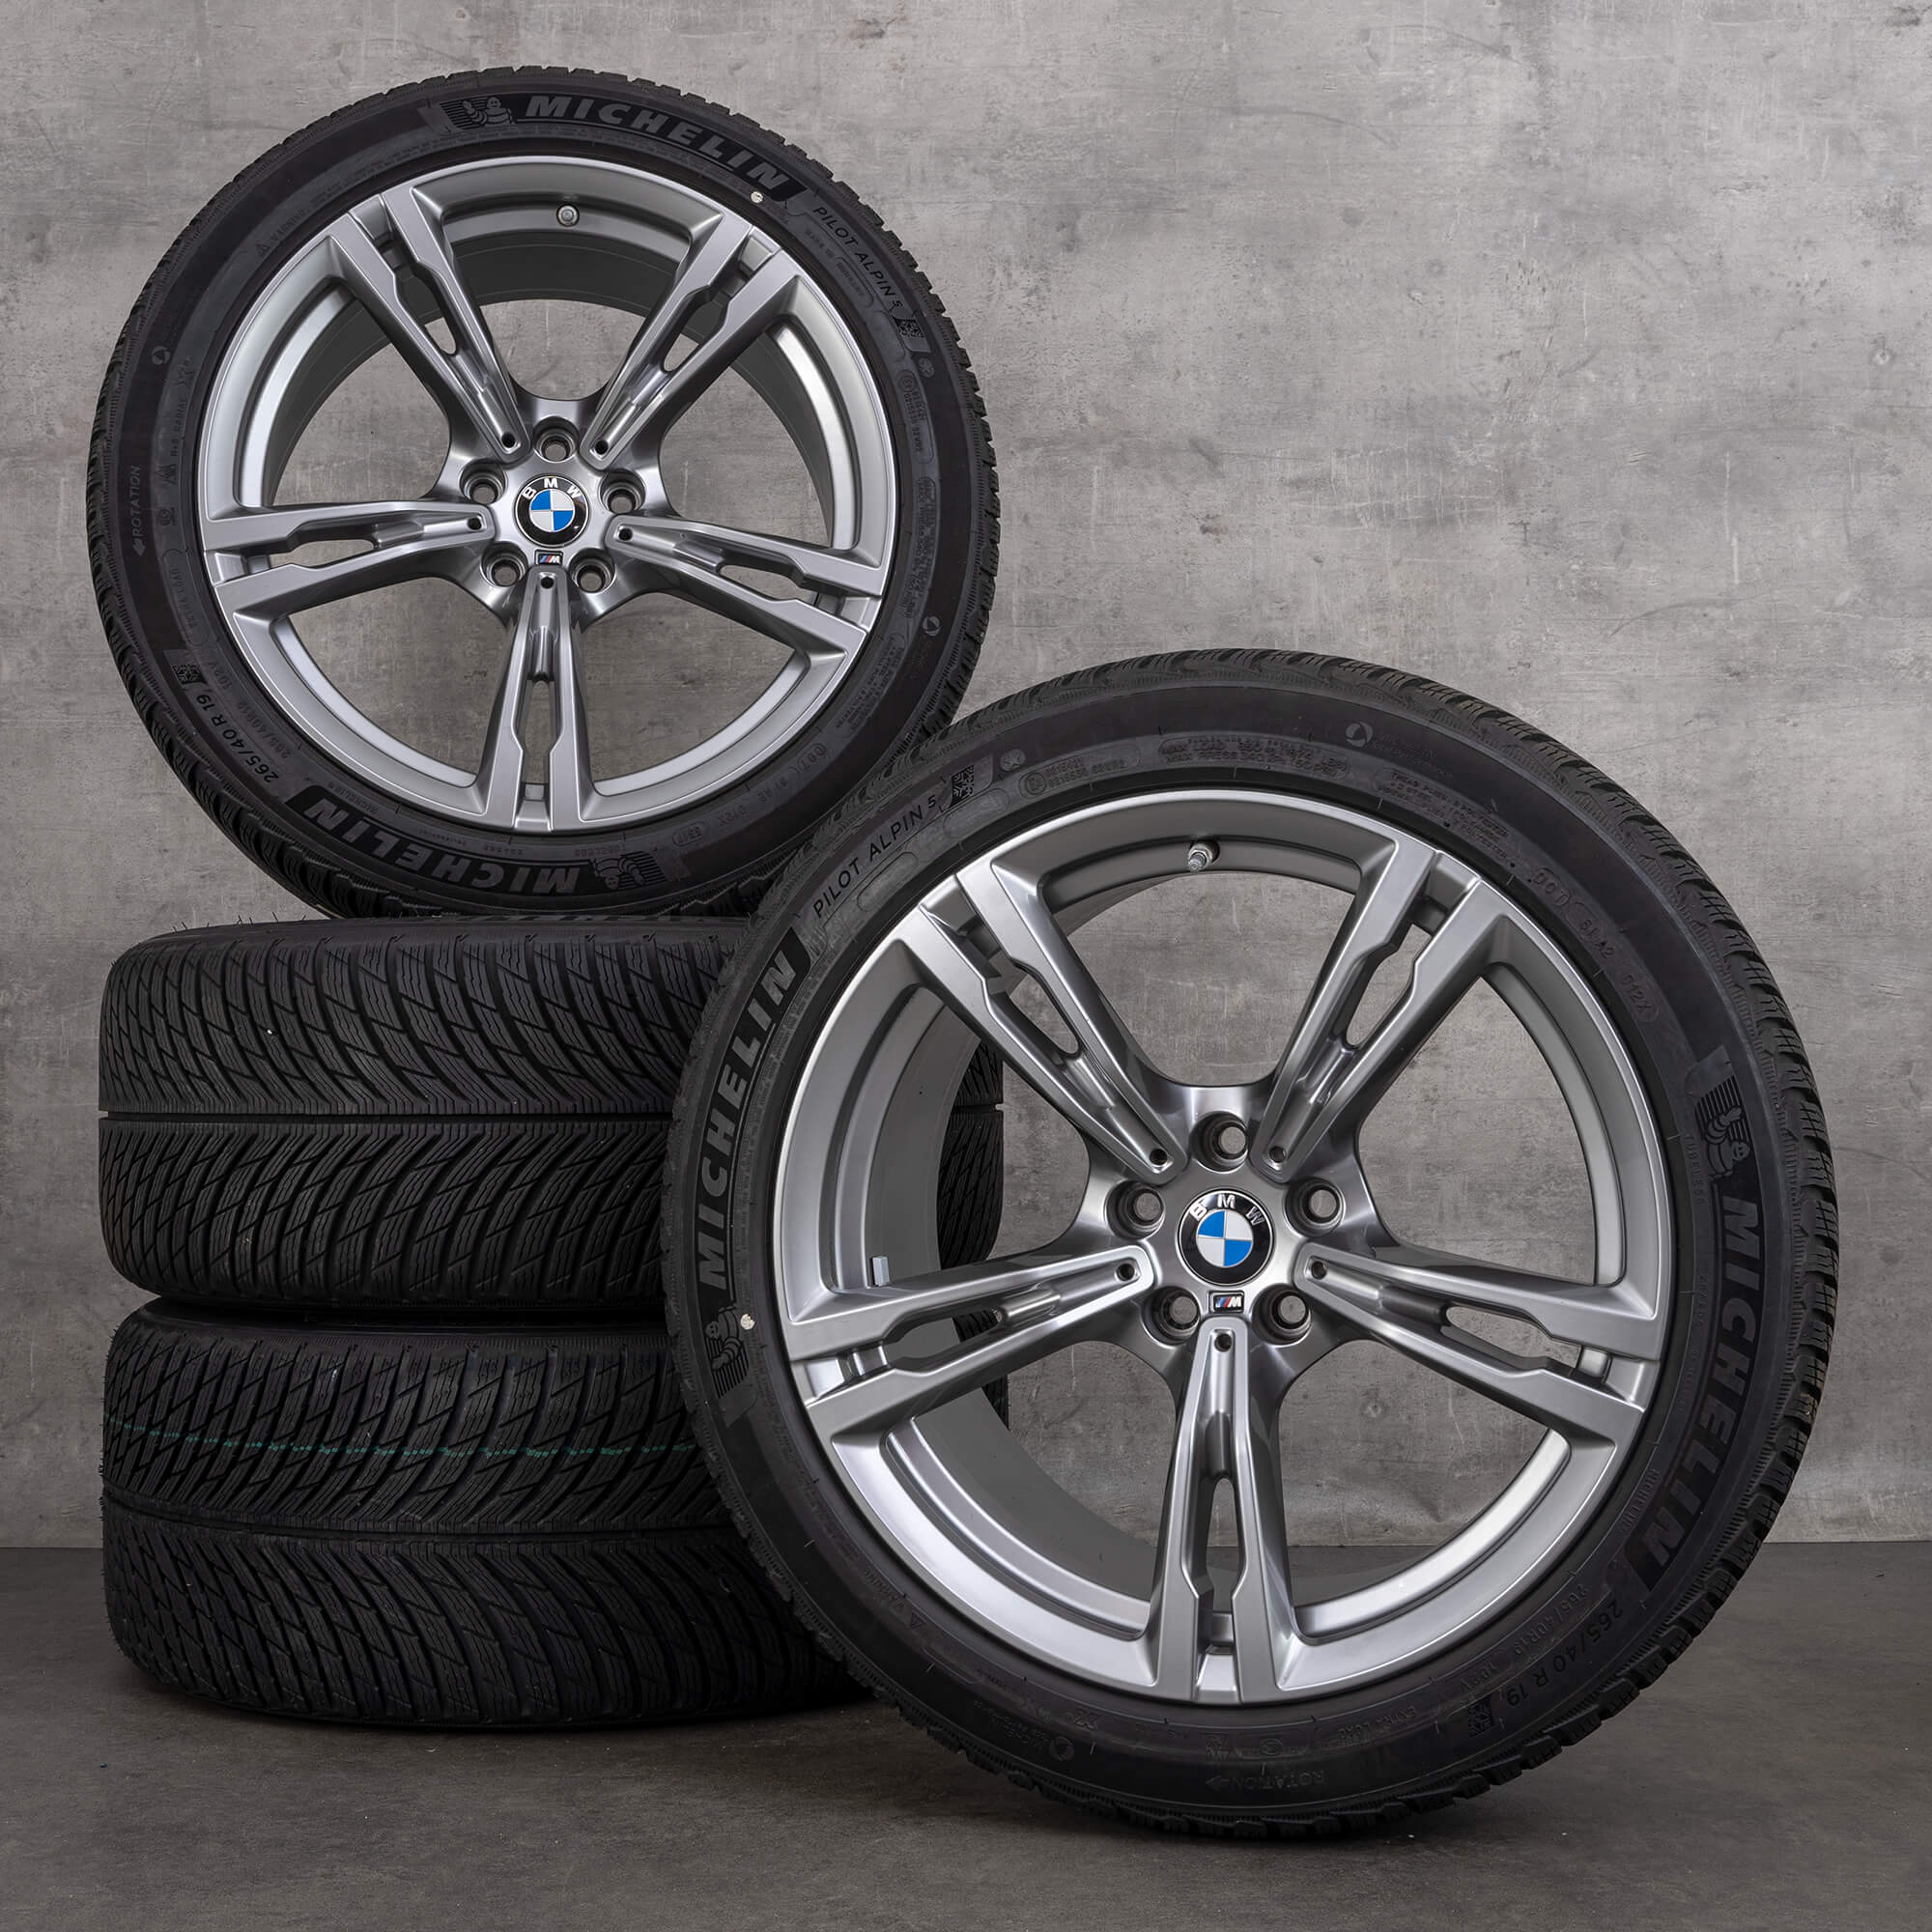 Cerchi BMW da 19 pollici M5 F90 ruote invernali pneumatici cerchi in alluminio